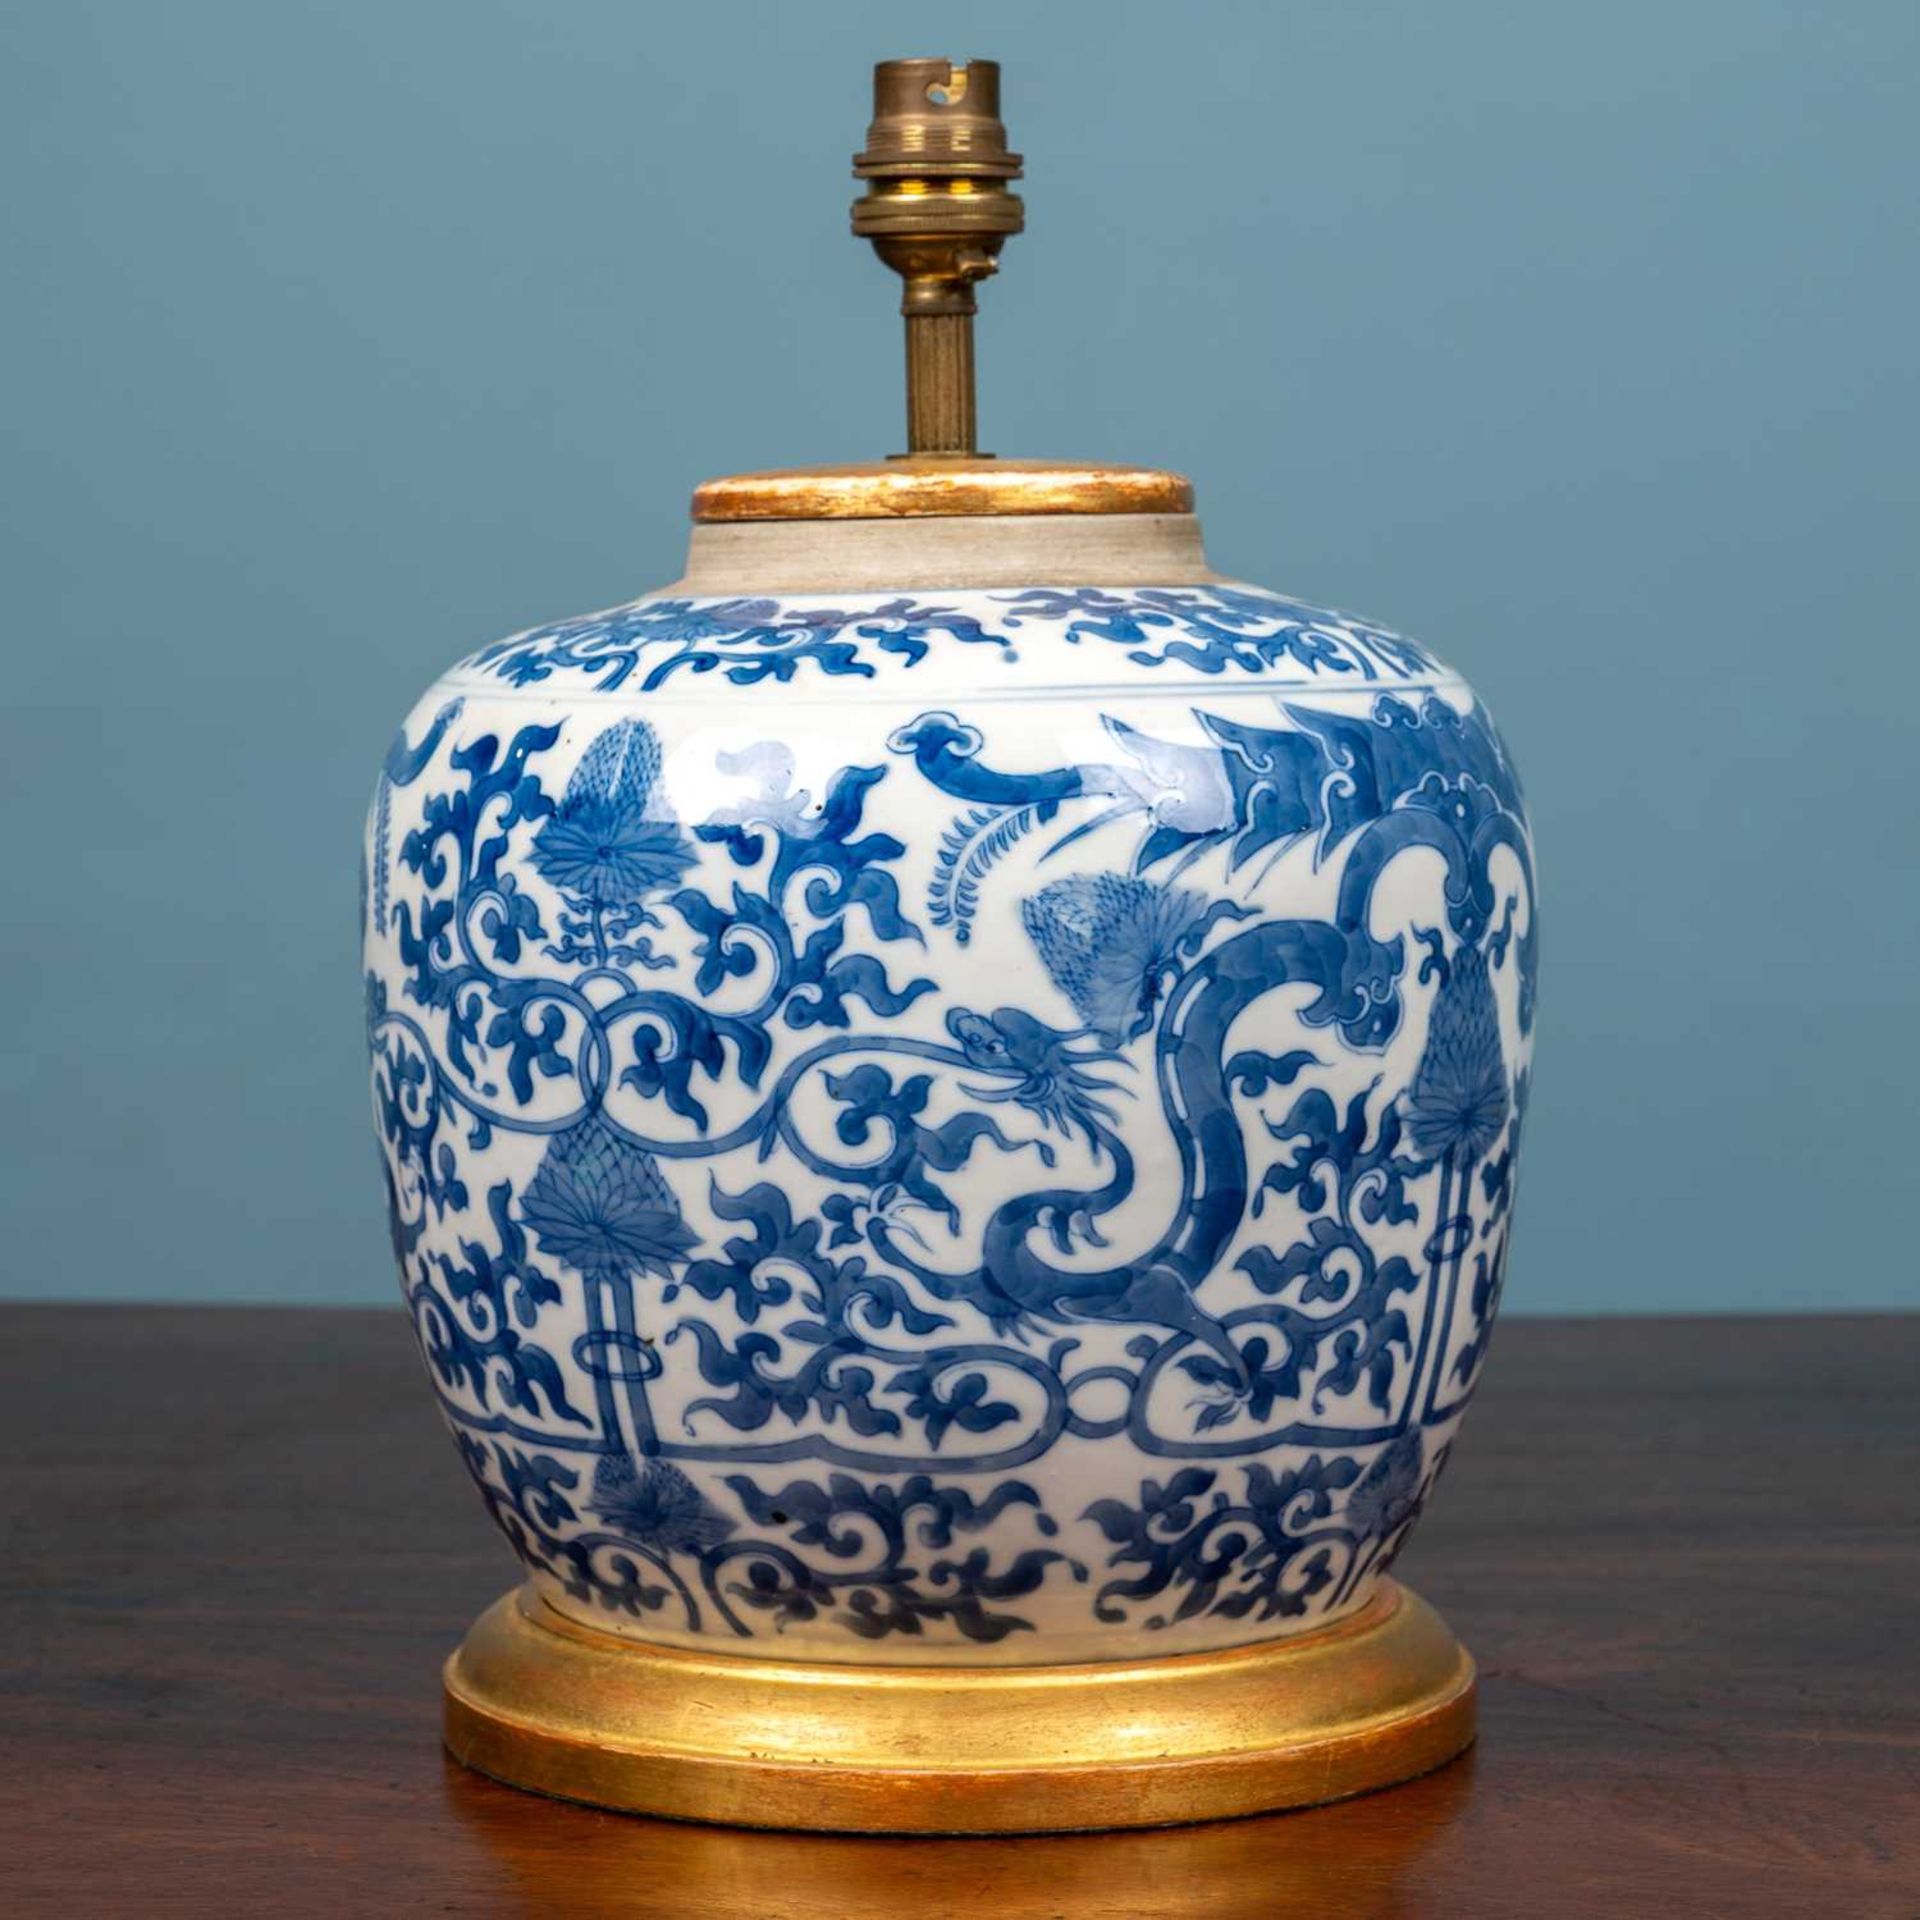 An porcelain table lamp